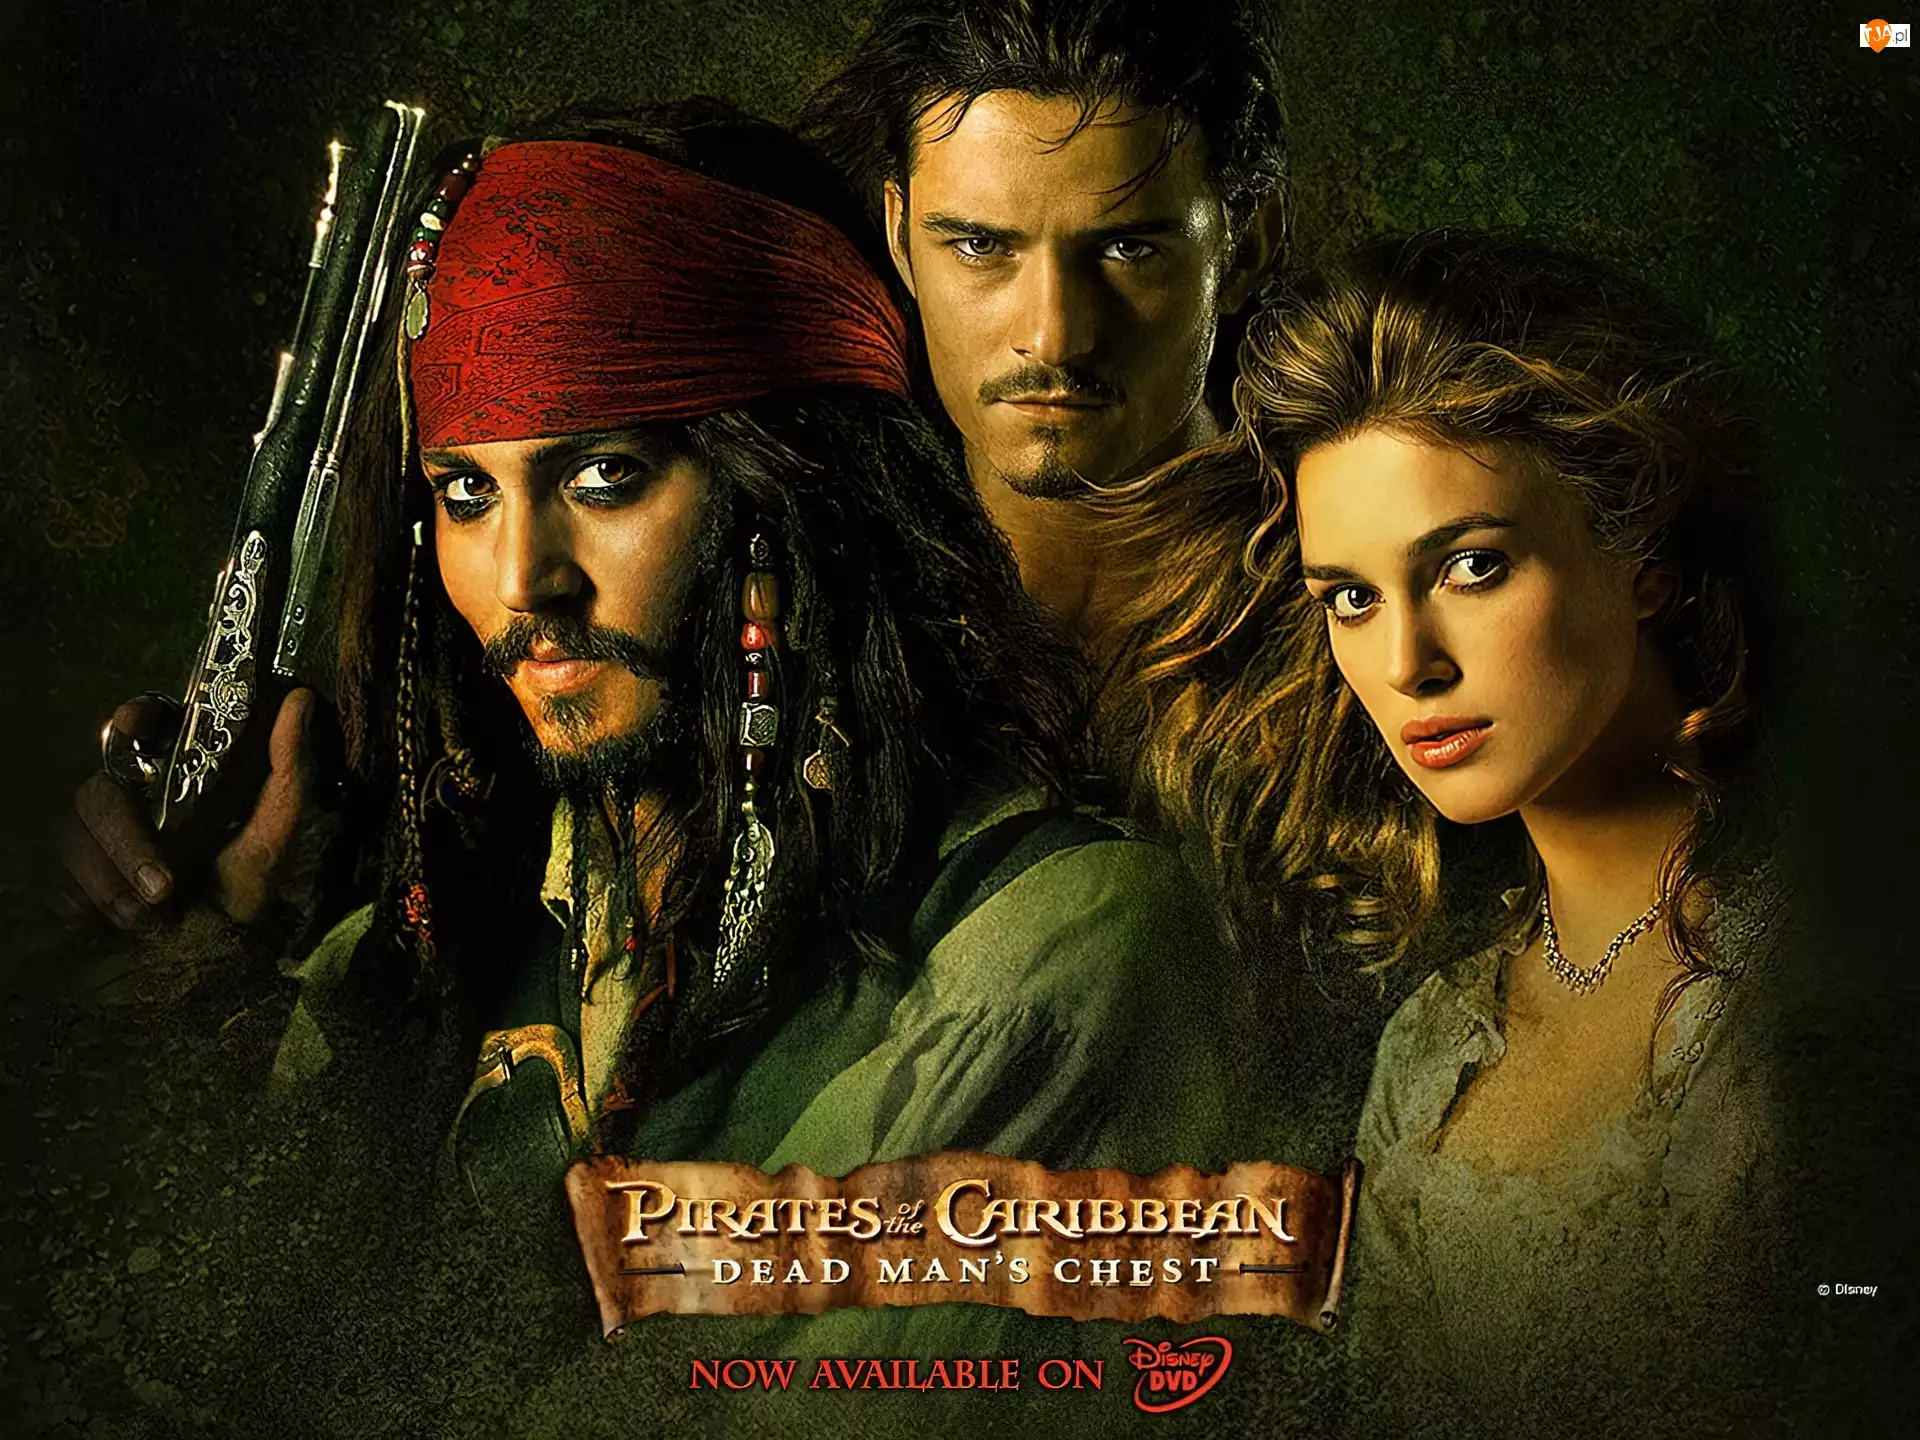 Pirates of the Caribbean, Aktor, Keira Knightley, Piraci z Karaibów, Aktorka, Orlando Bloom, Johnny Depp